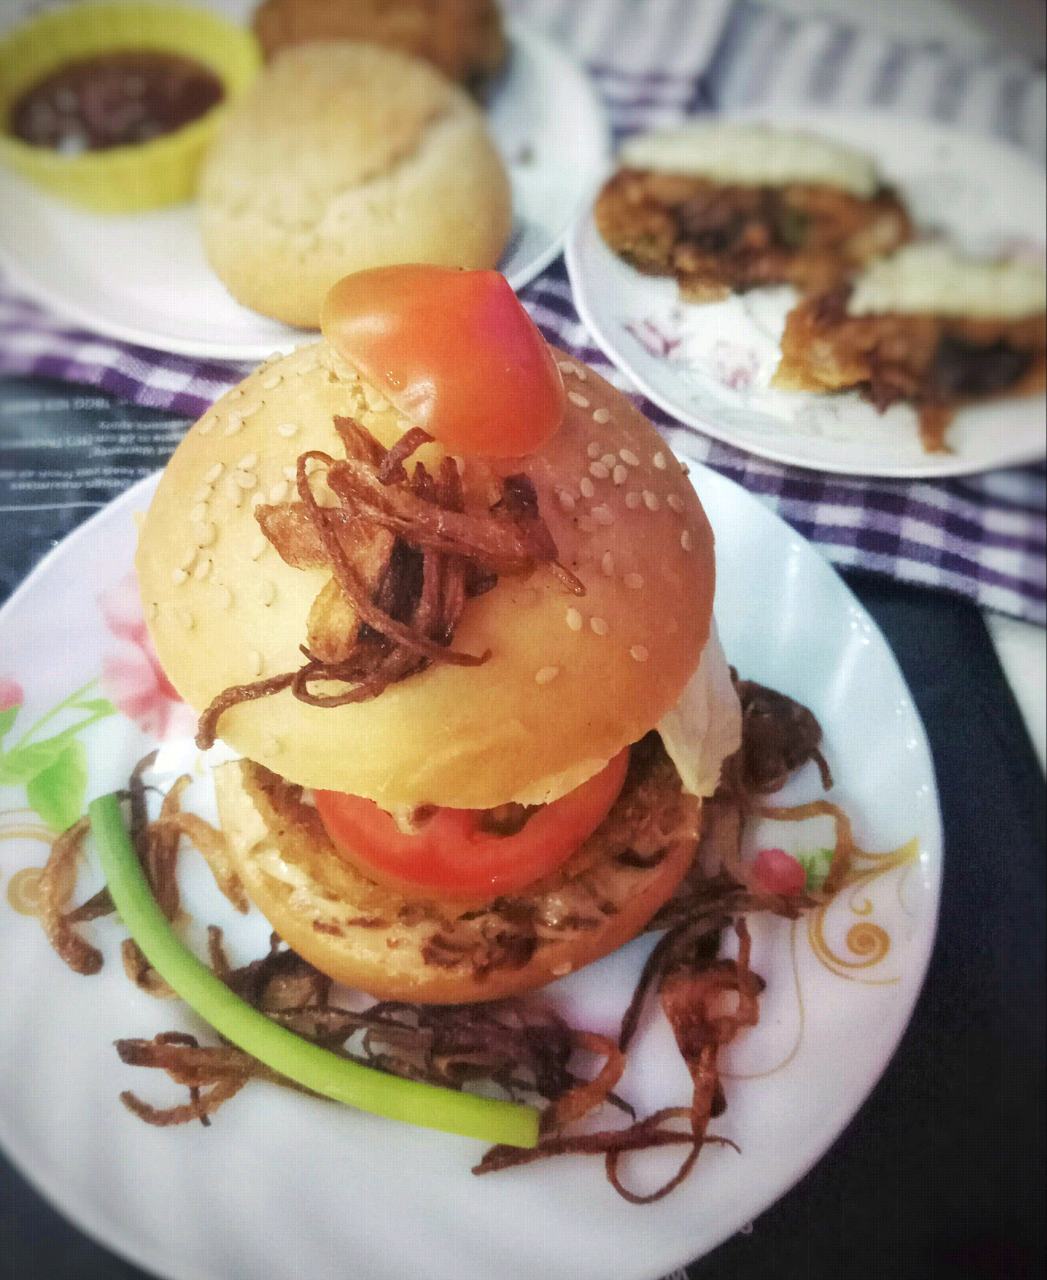 Caramalized Onion And Fish Burger